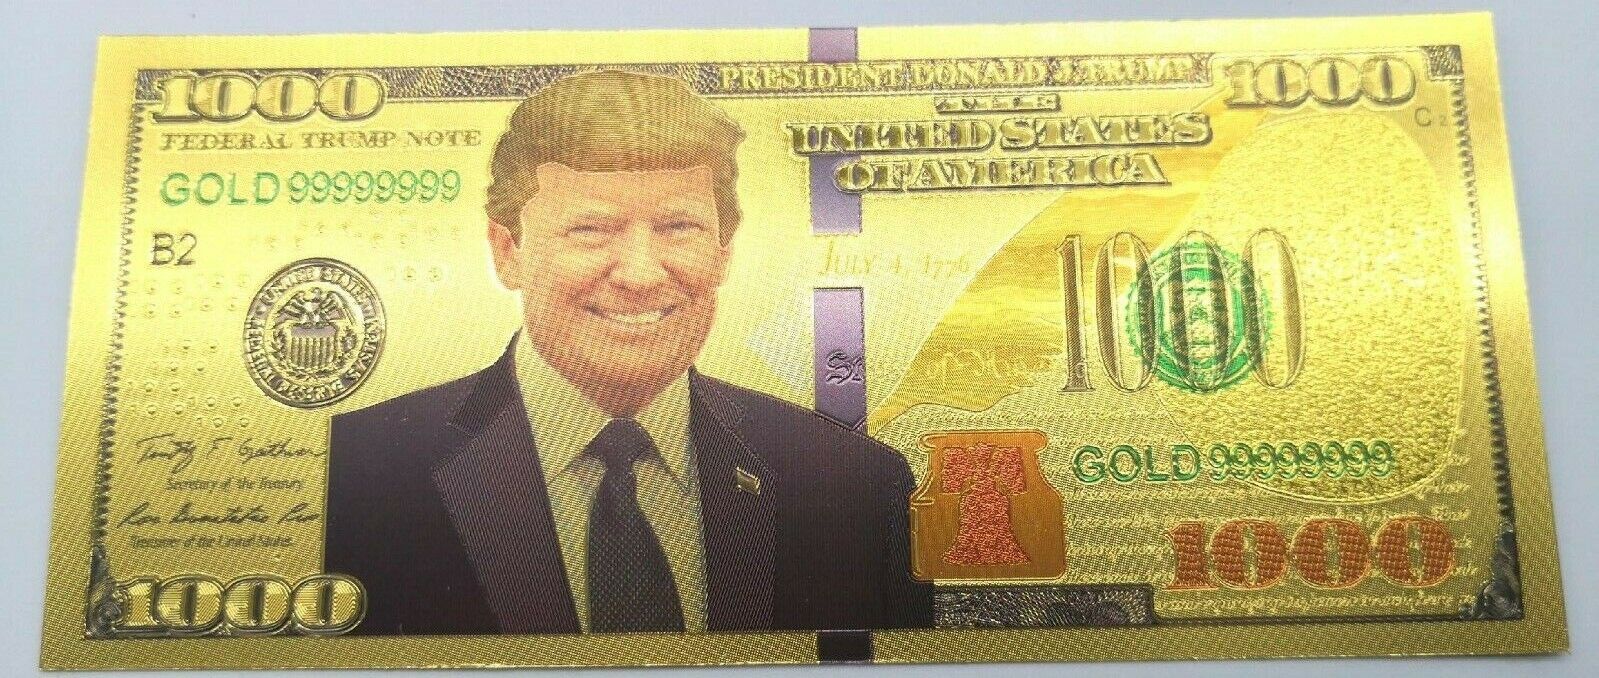 50 PCS President Donald Trump $1000 Gold-Plated Collectible Money Novelty US Без бренда - фотография #2